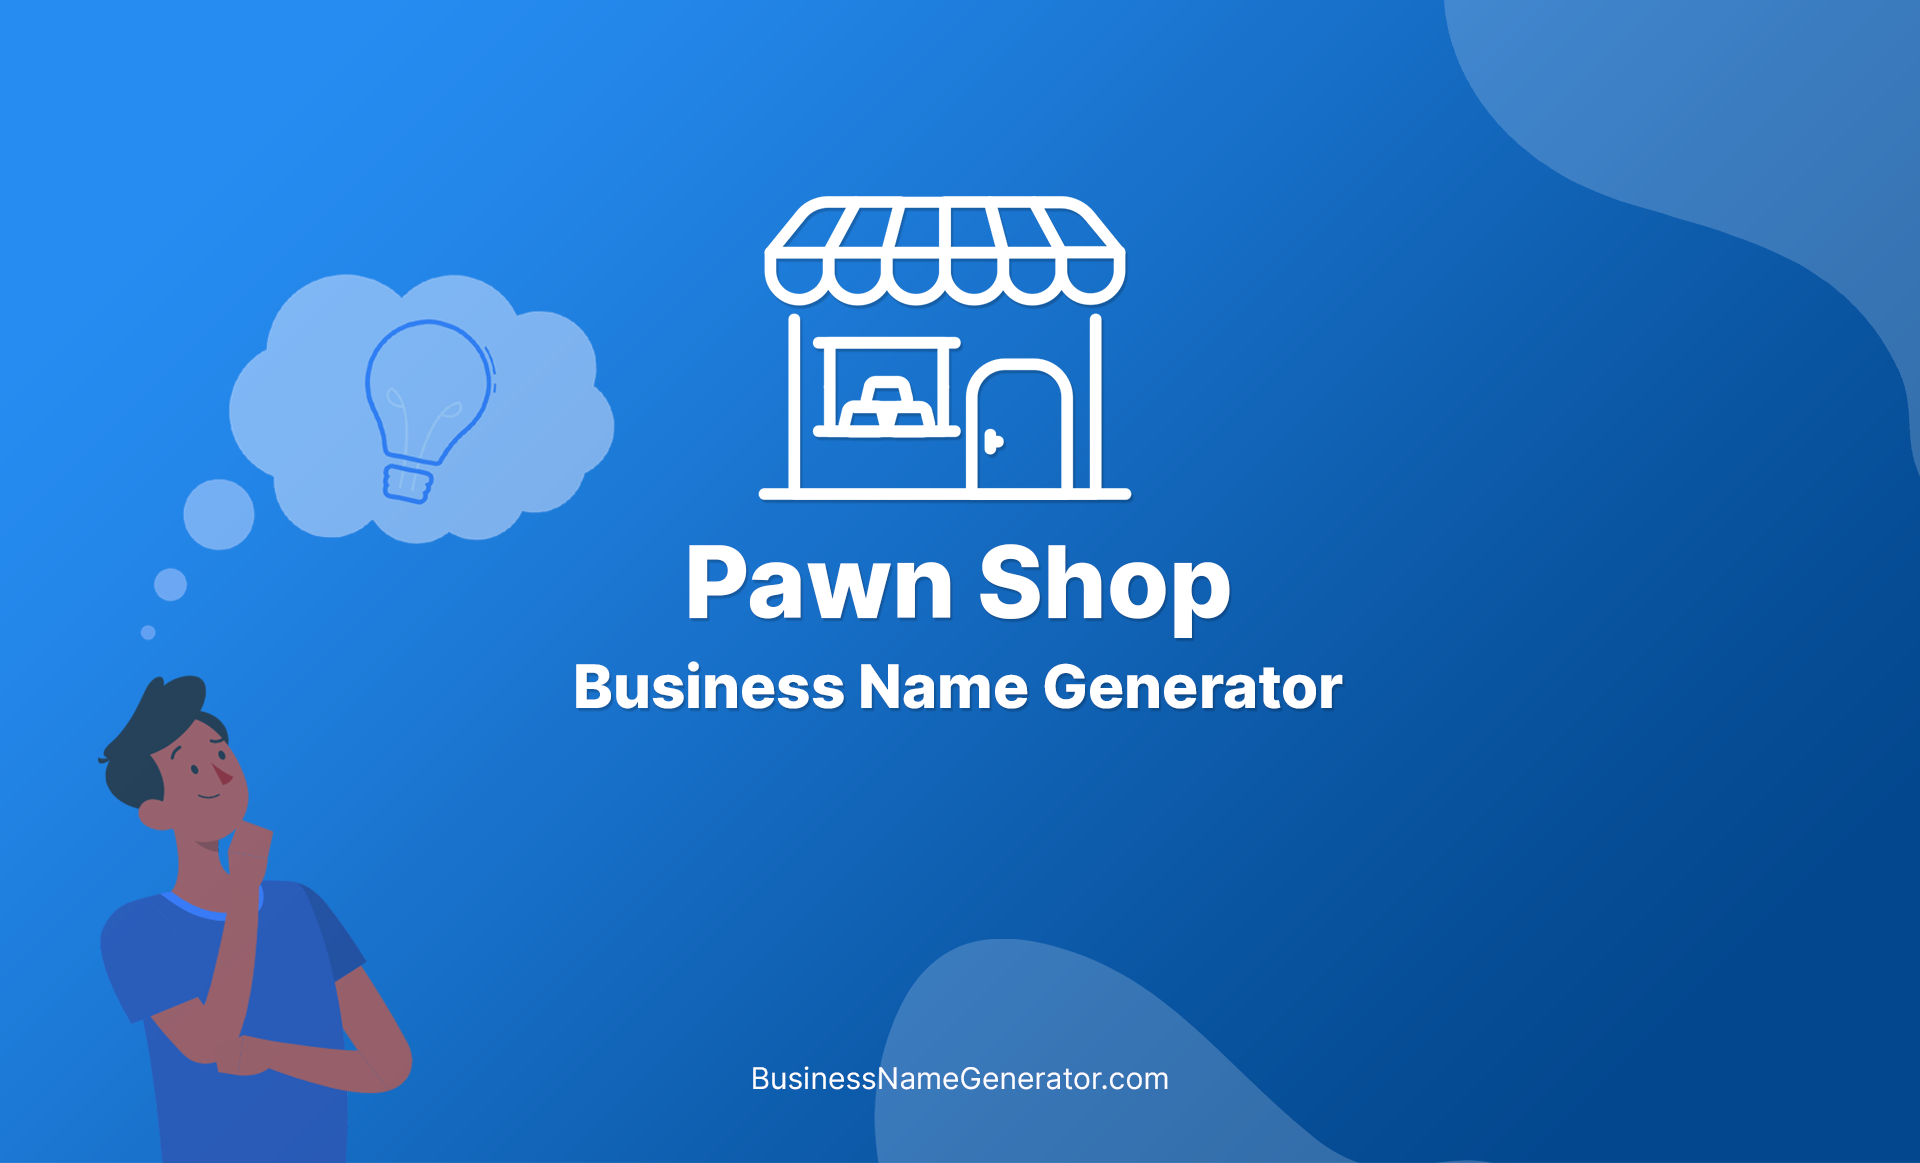 Pawn Shop Business Name Generator